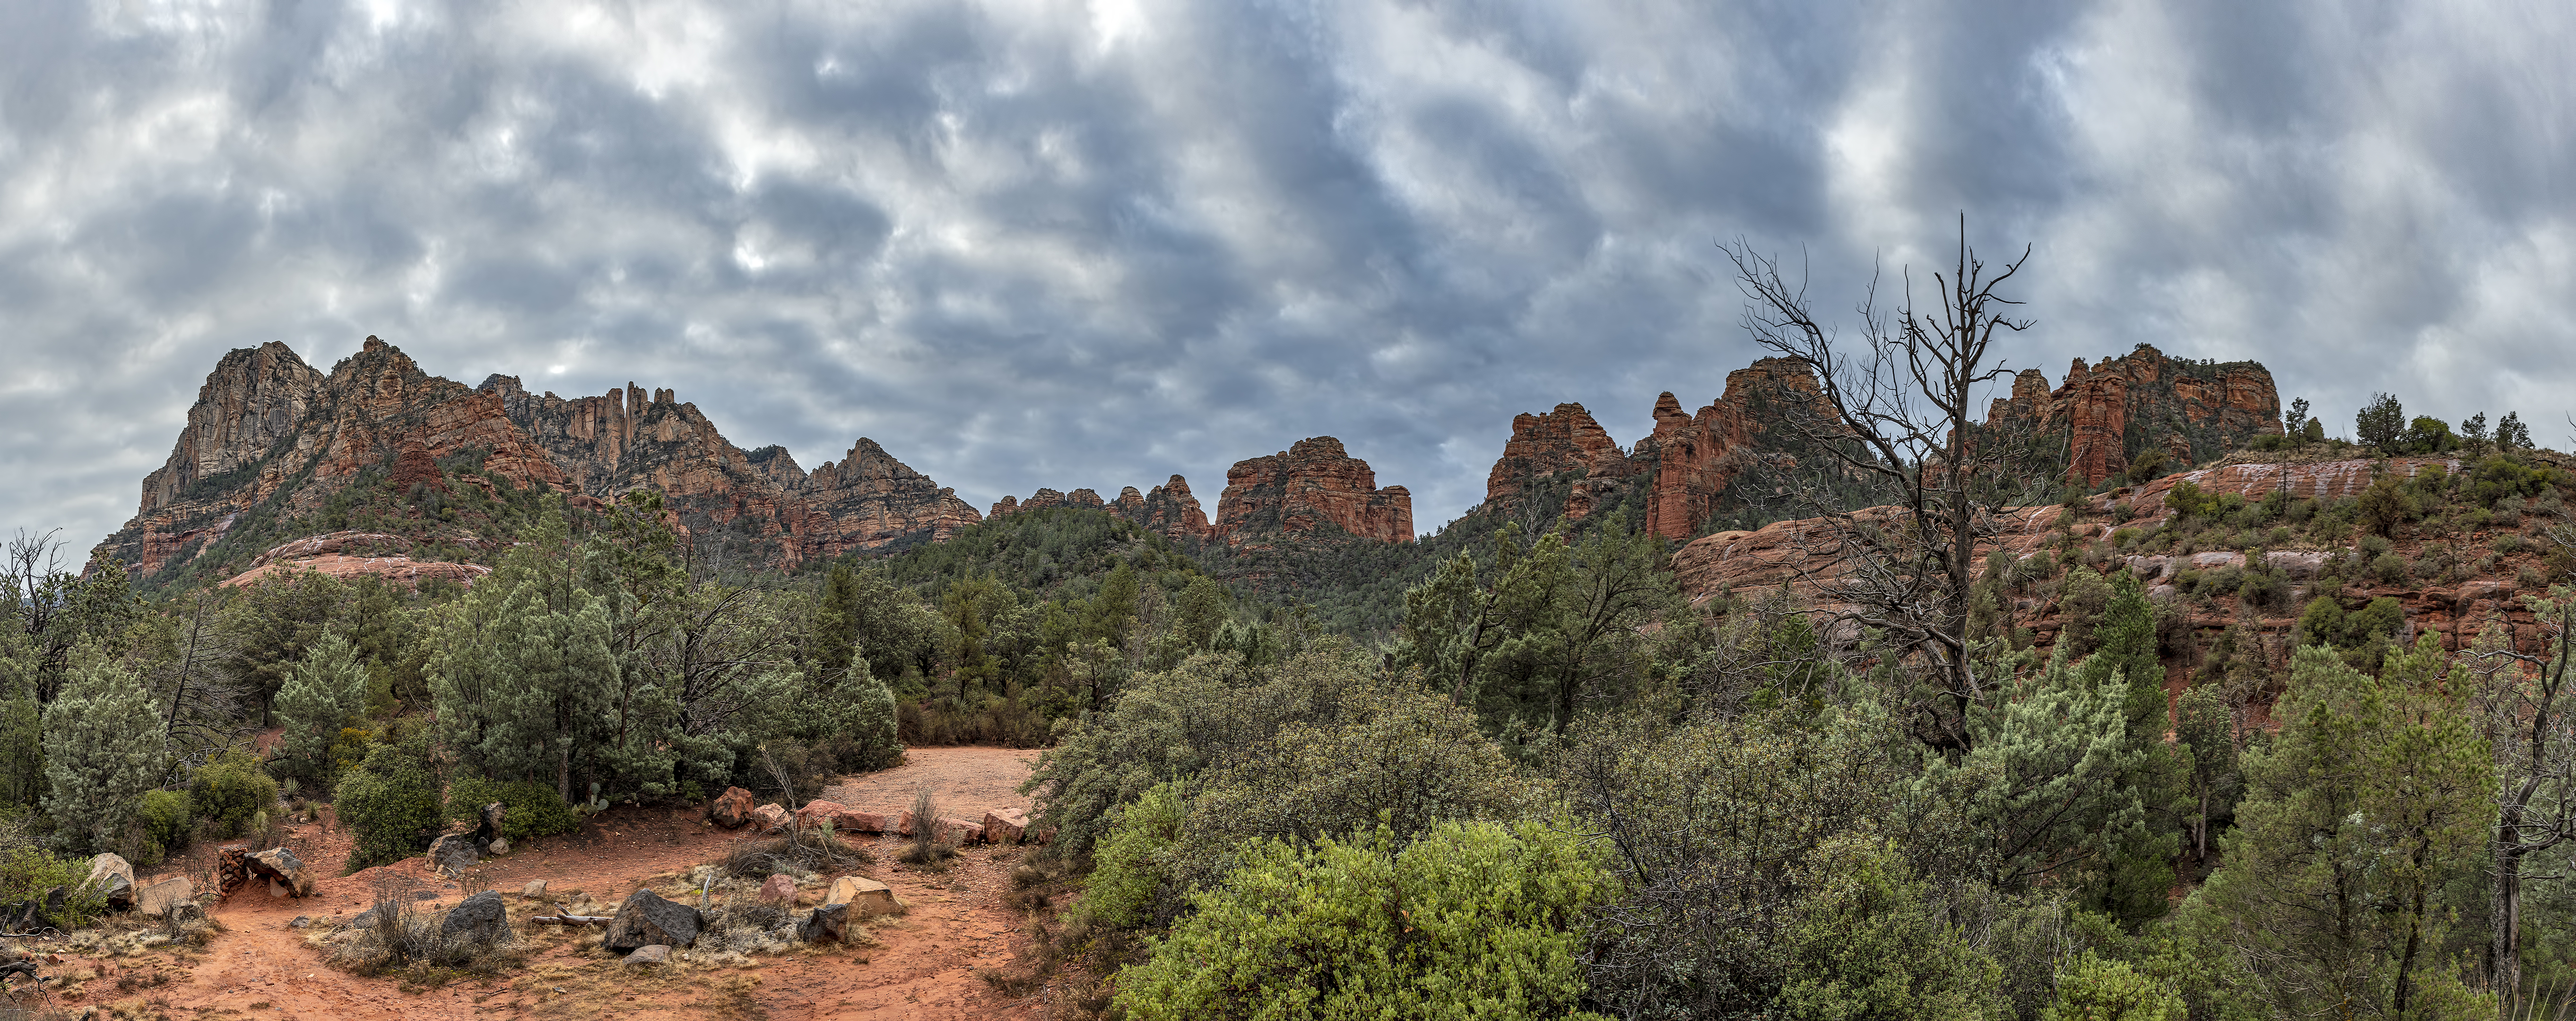 10-photo photomerge sedona arizona munds wagon trail panorama